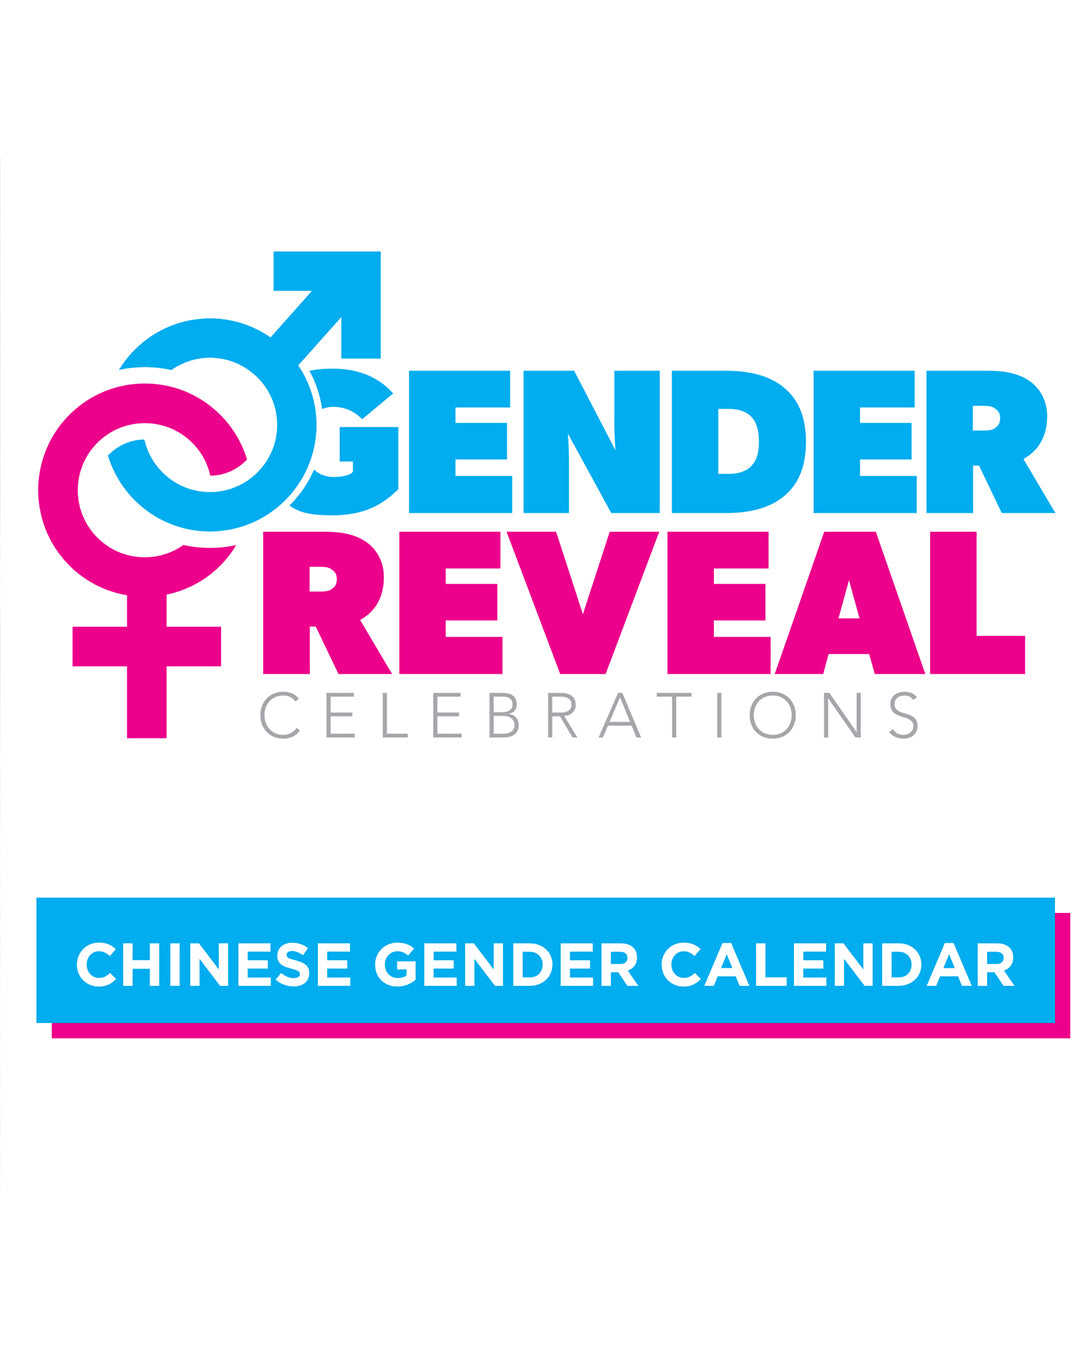 Chinese Gender Calendar pic